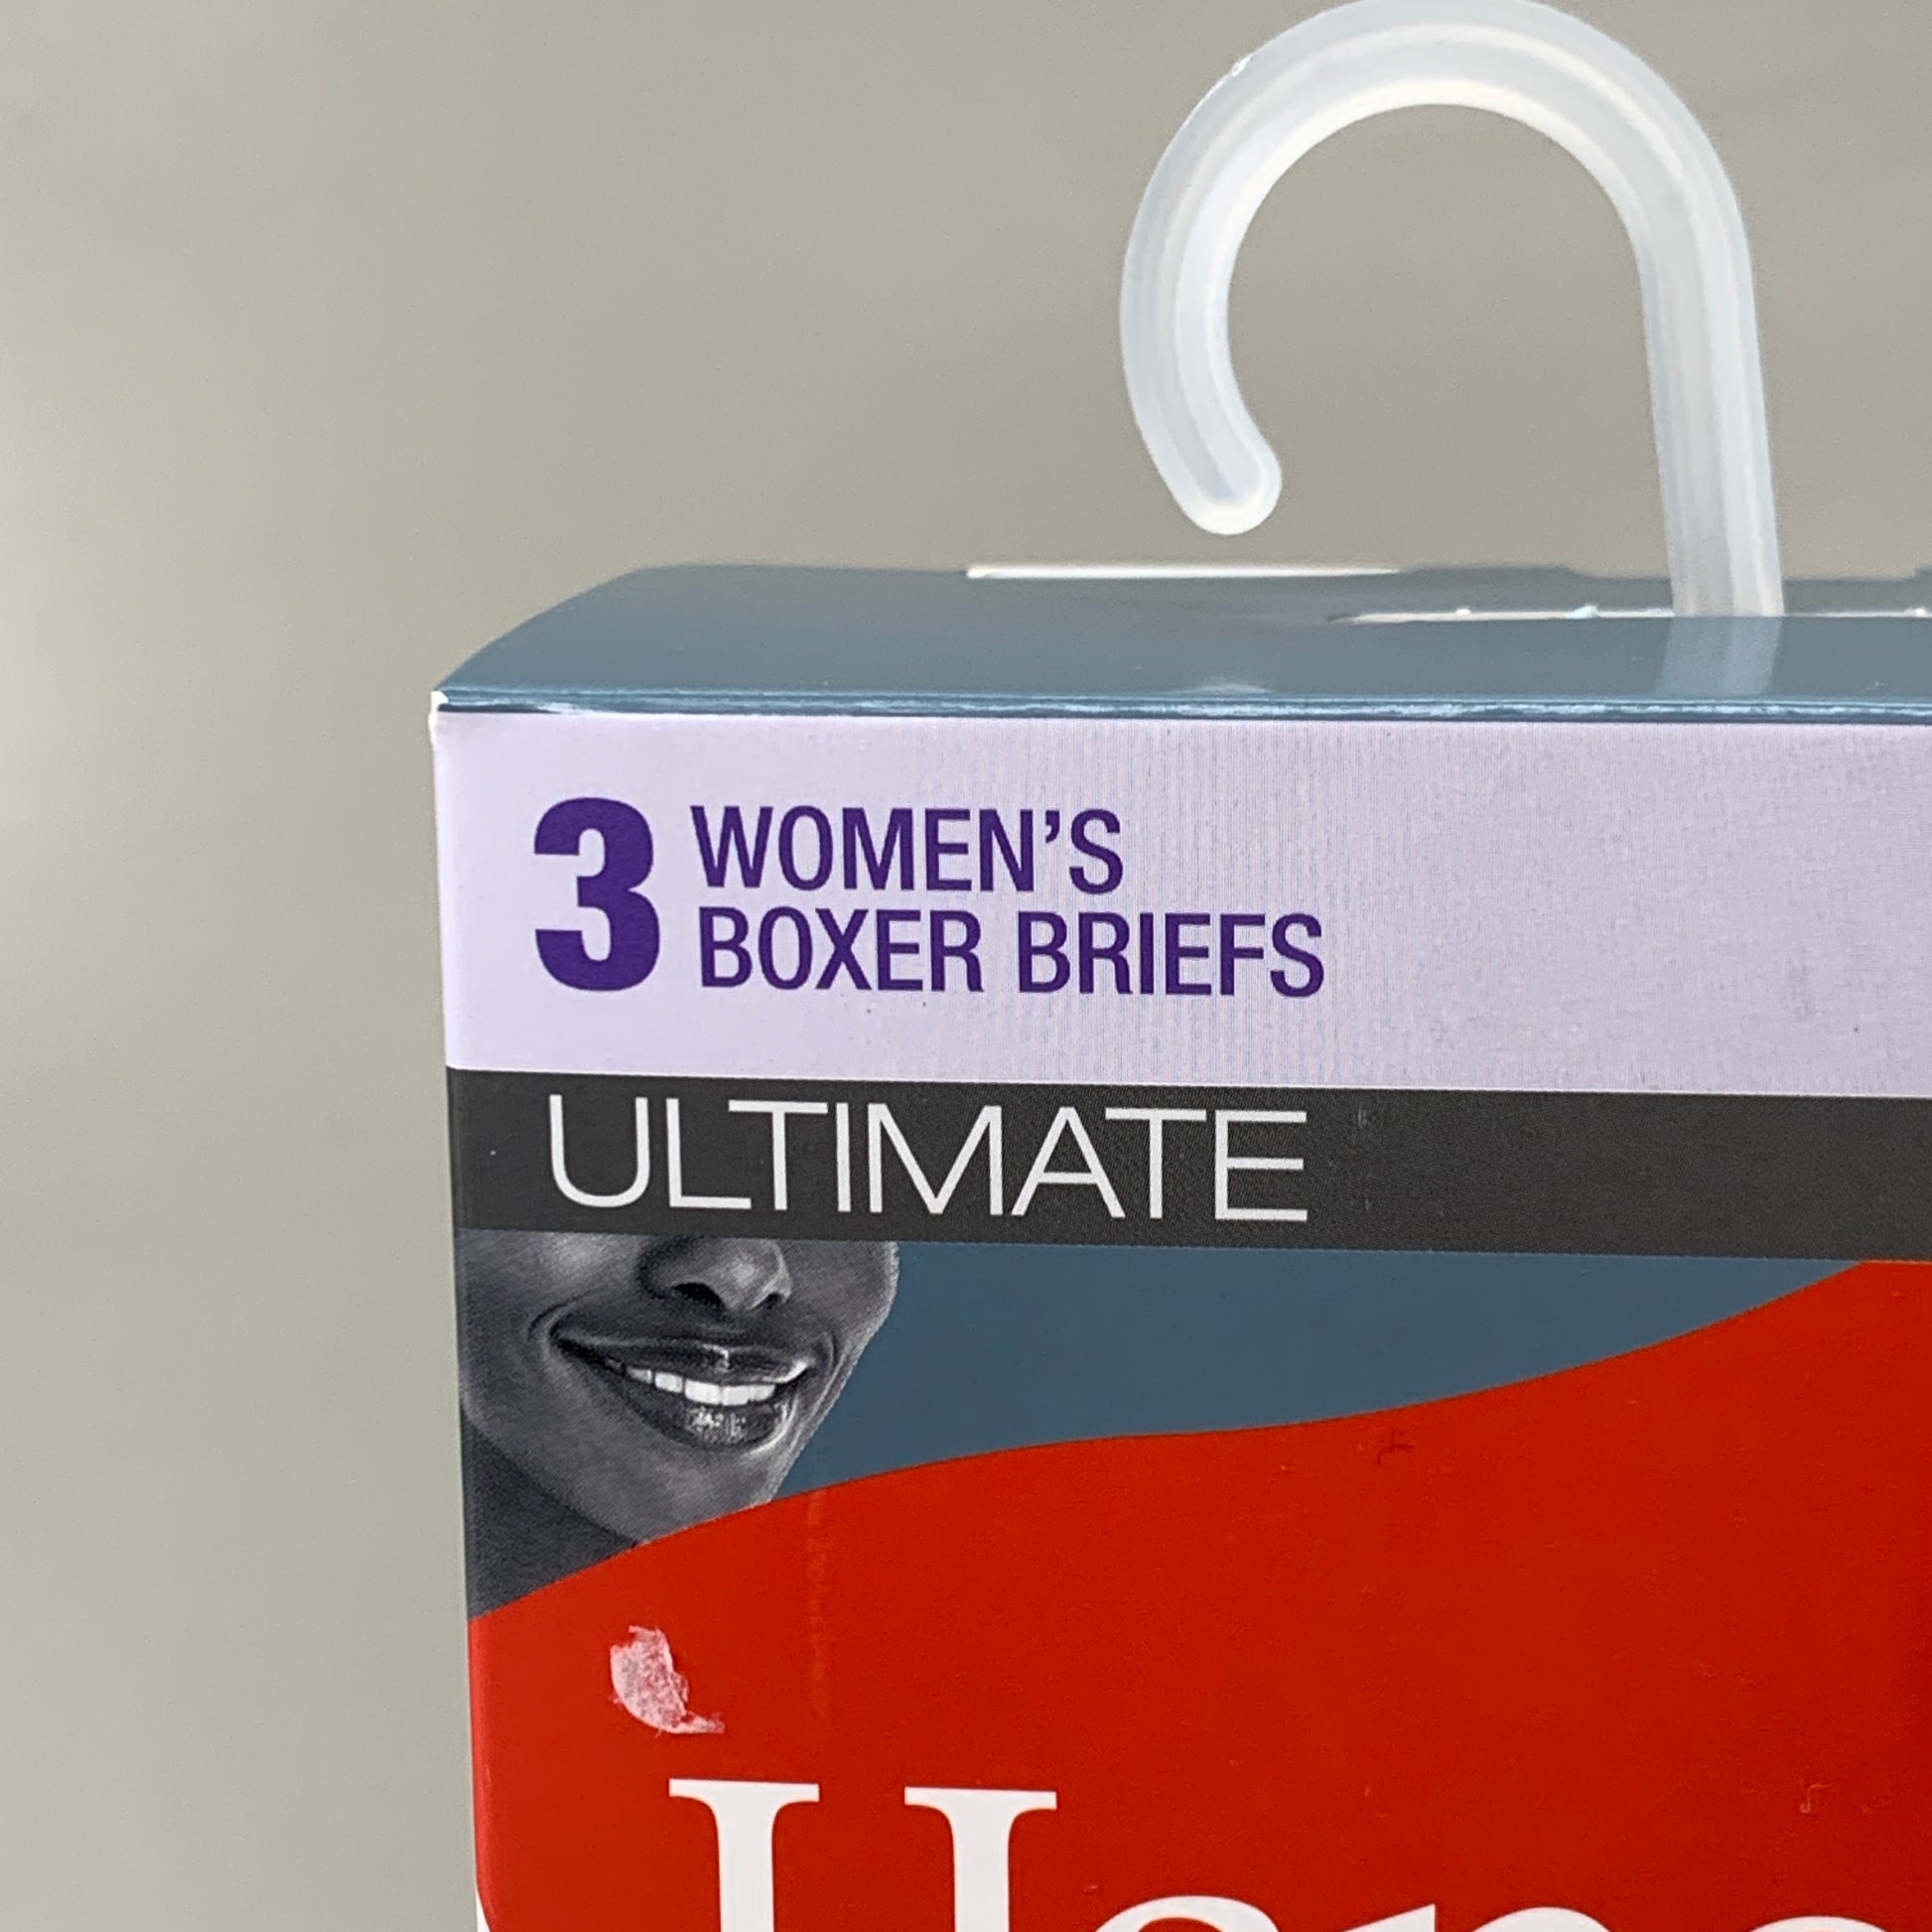 HANES 3 PACK!! Originals Women's Breathable Cotton Boxer Briefs Underw –  PayWut